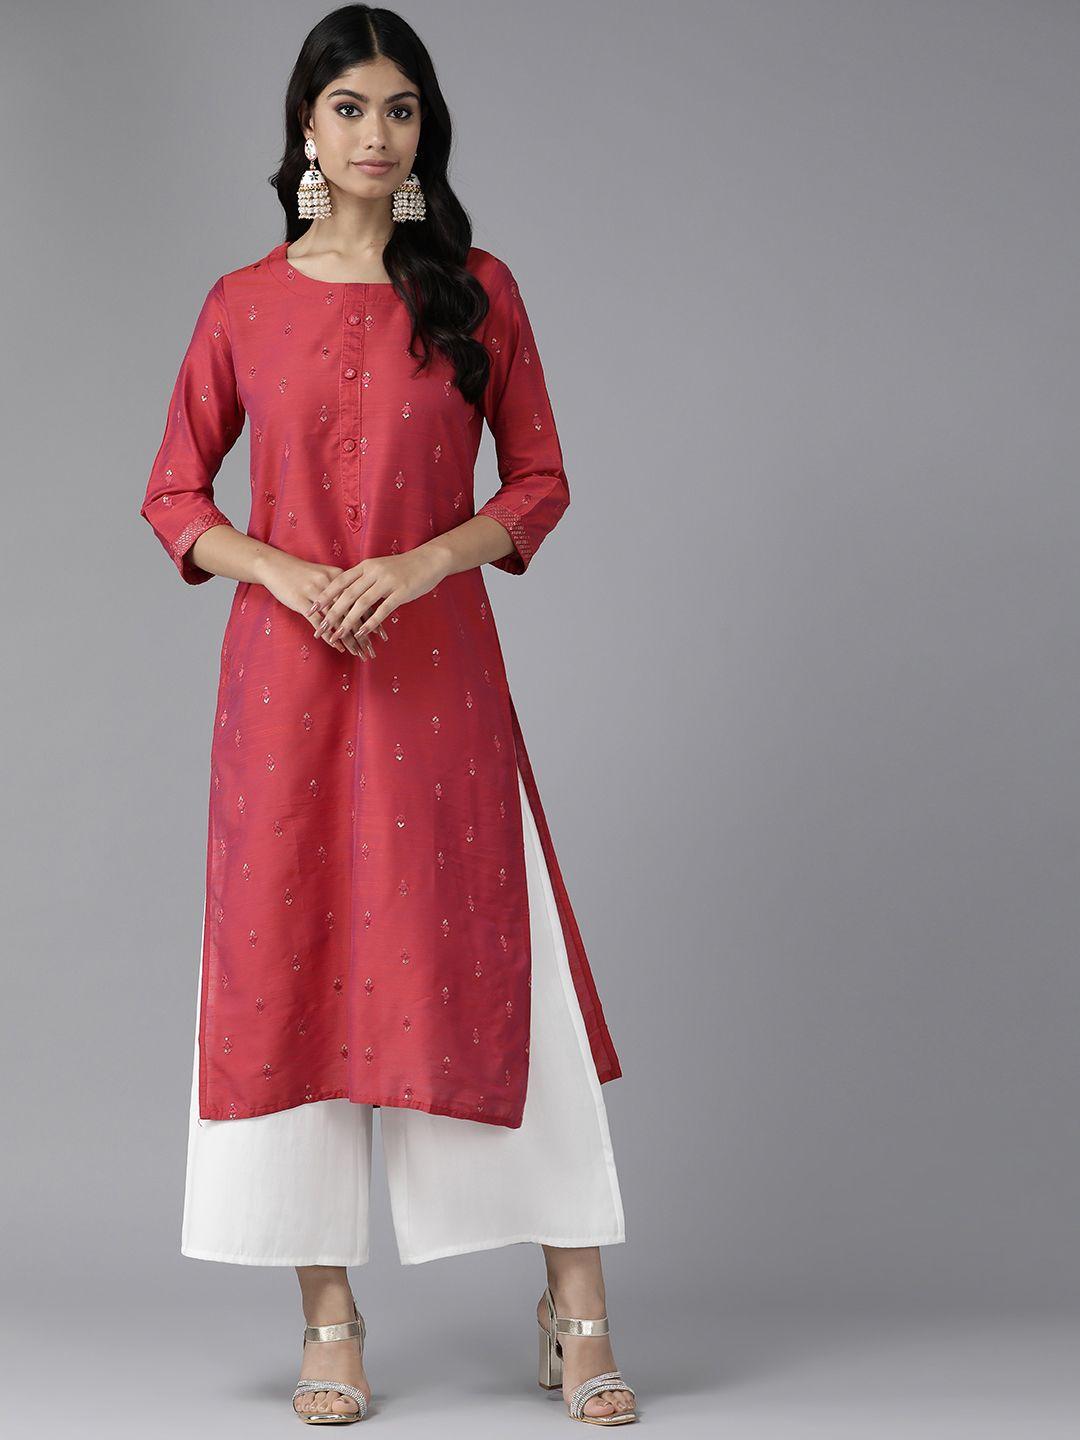 aarika women red ethnic motifs embroidered sequinned kurta